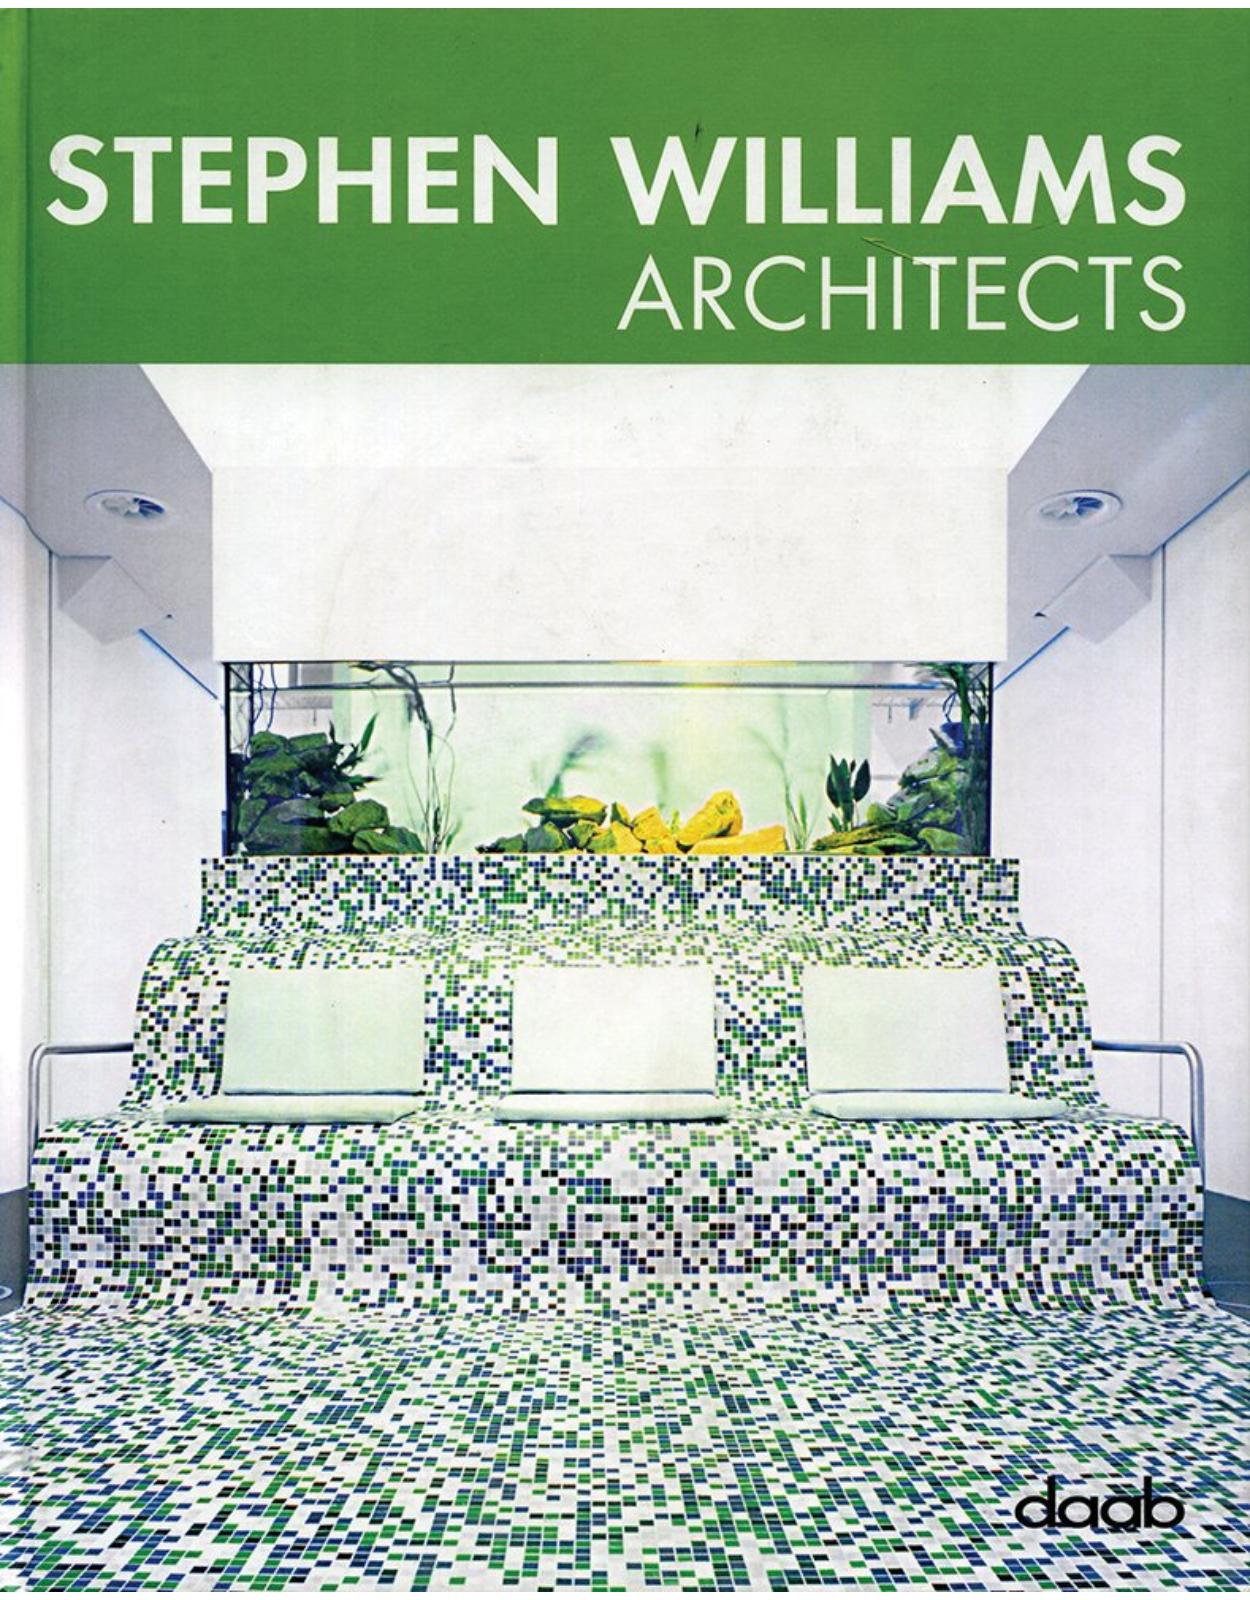 Stephen Williams: Architects